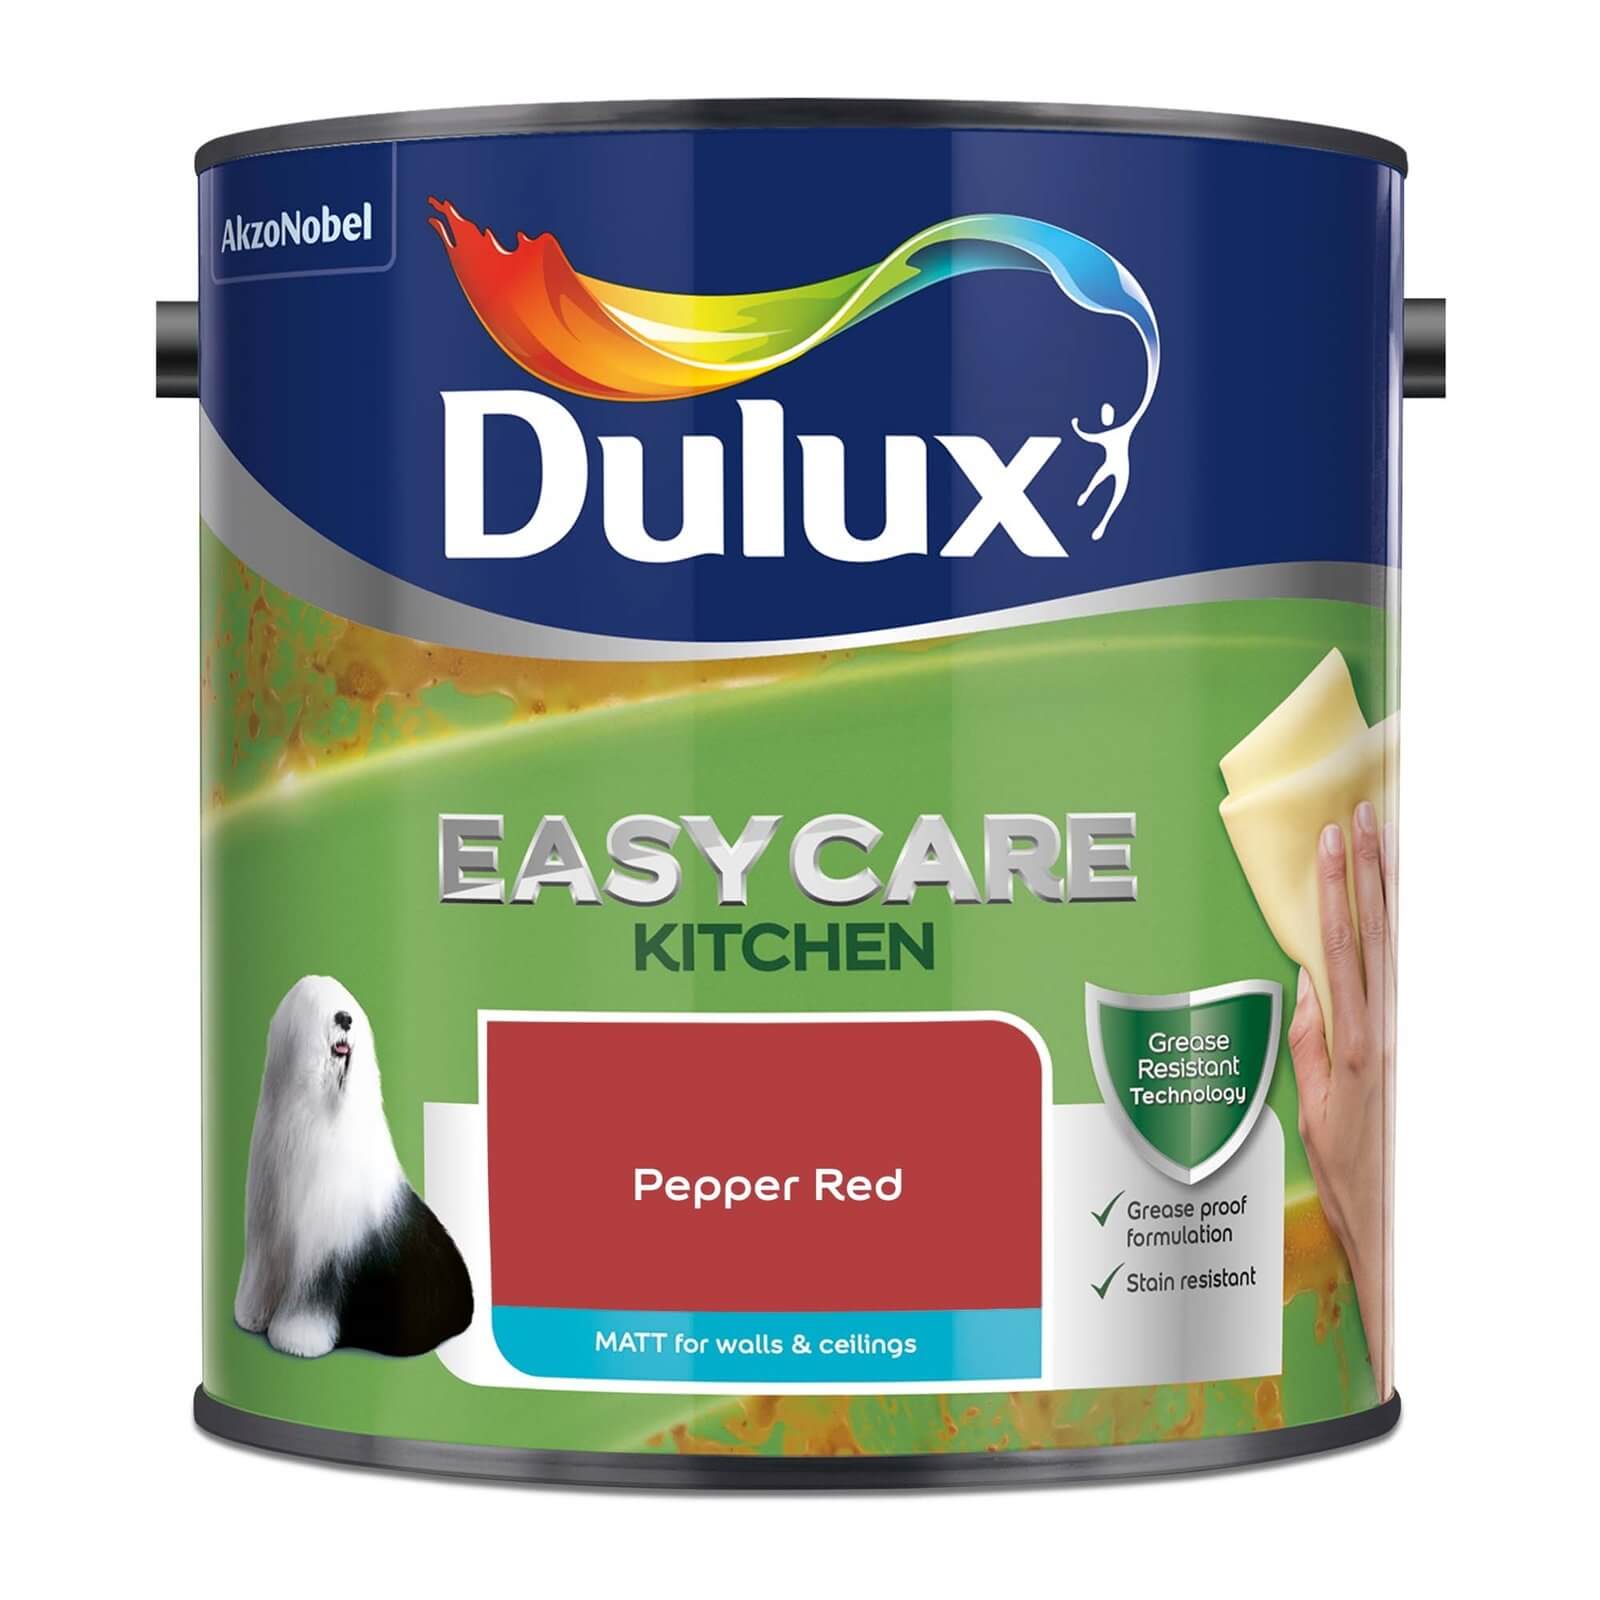 Dulux Easycare Kitchen Matt Pepper Red Matt Emulsion Paint - 2.5L